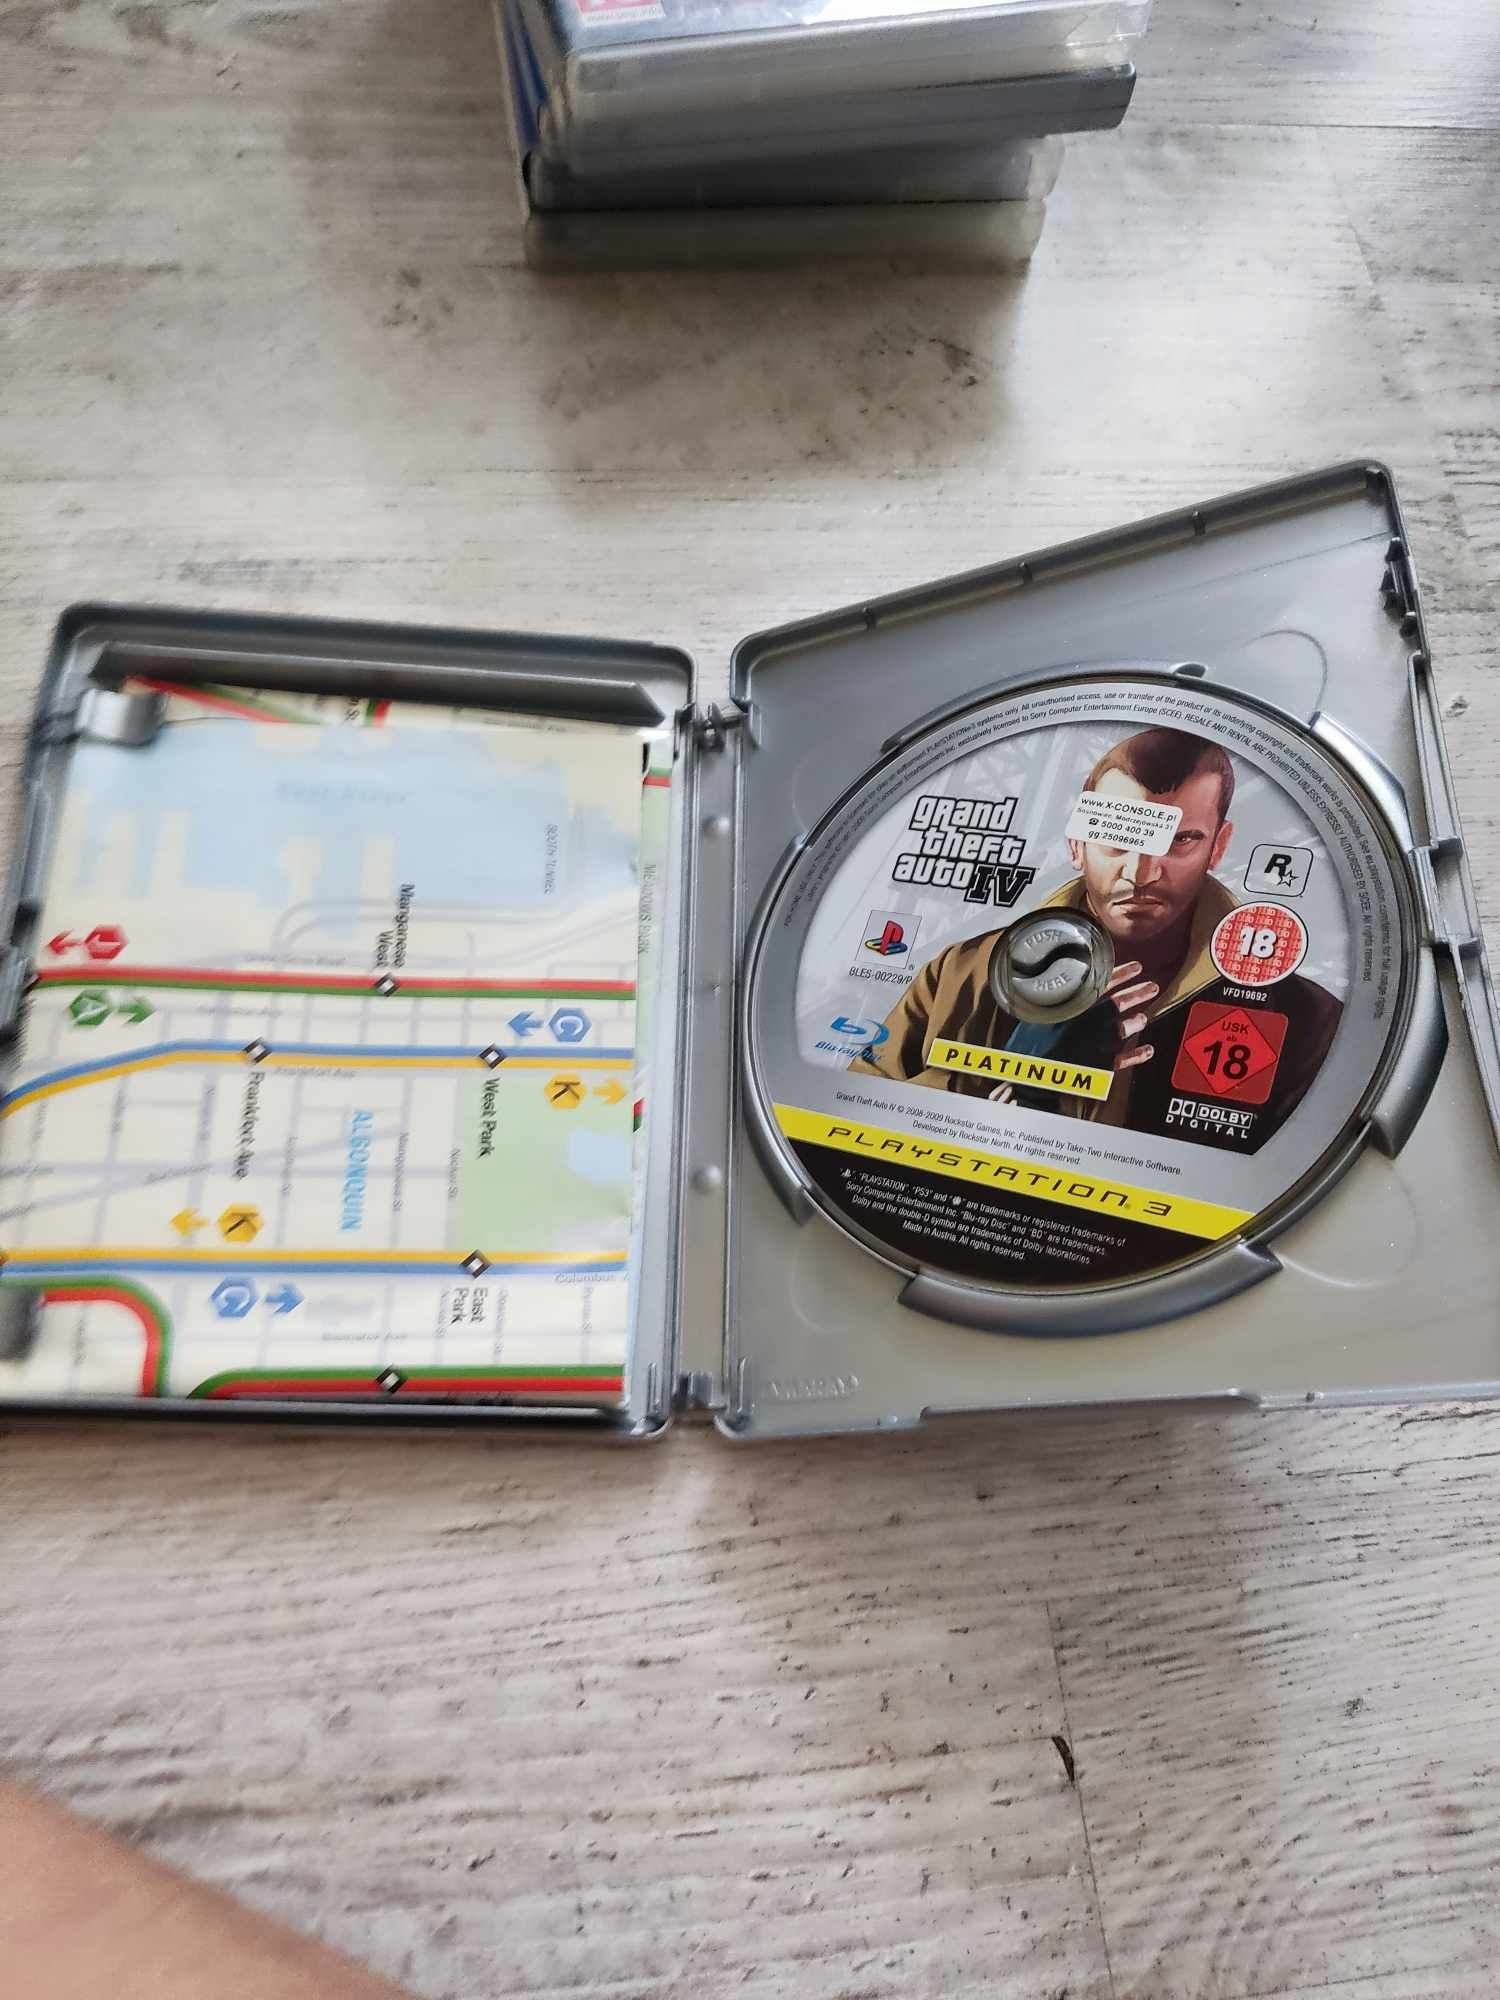 Gra Grand theft auto IV/ GTA IV (4) PlayStation 3, PS 3